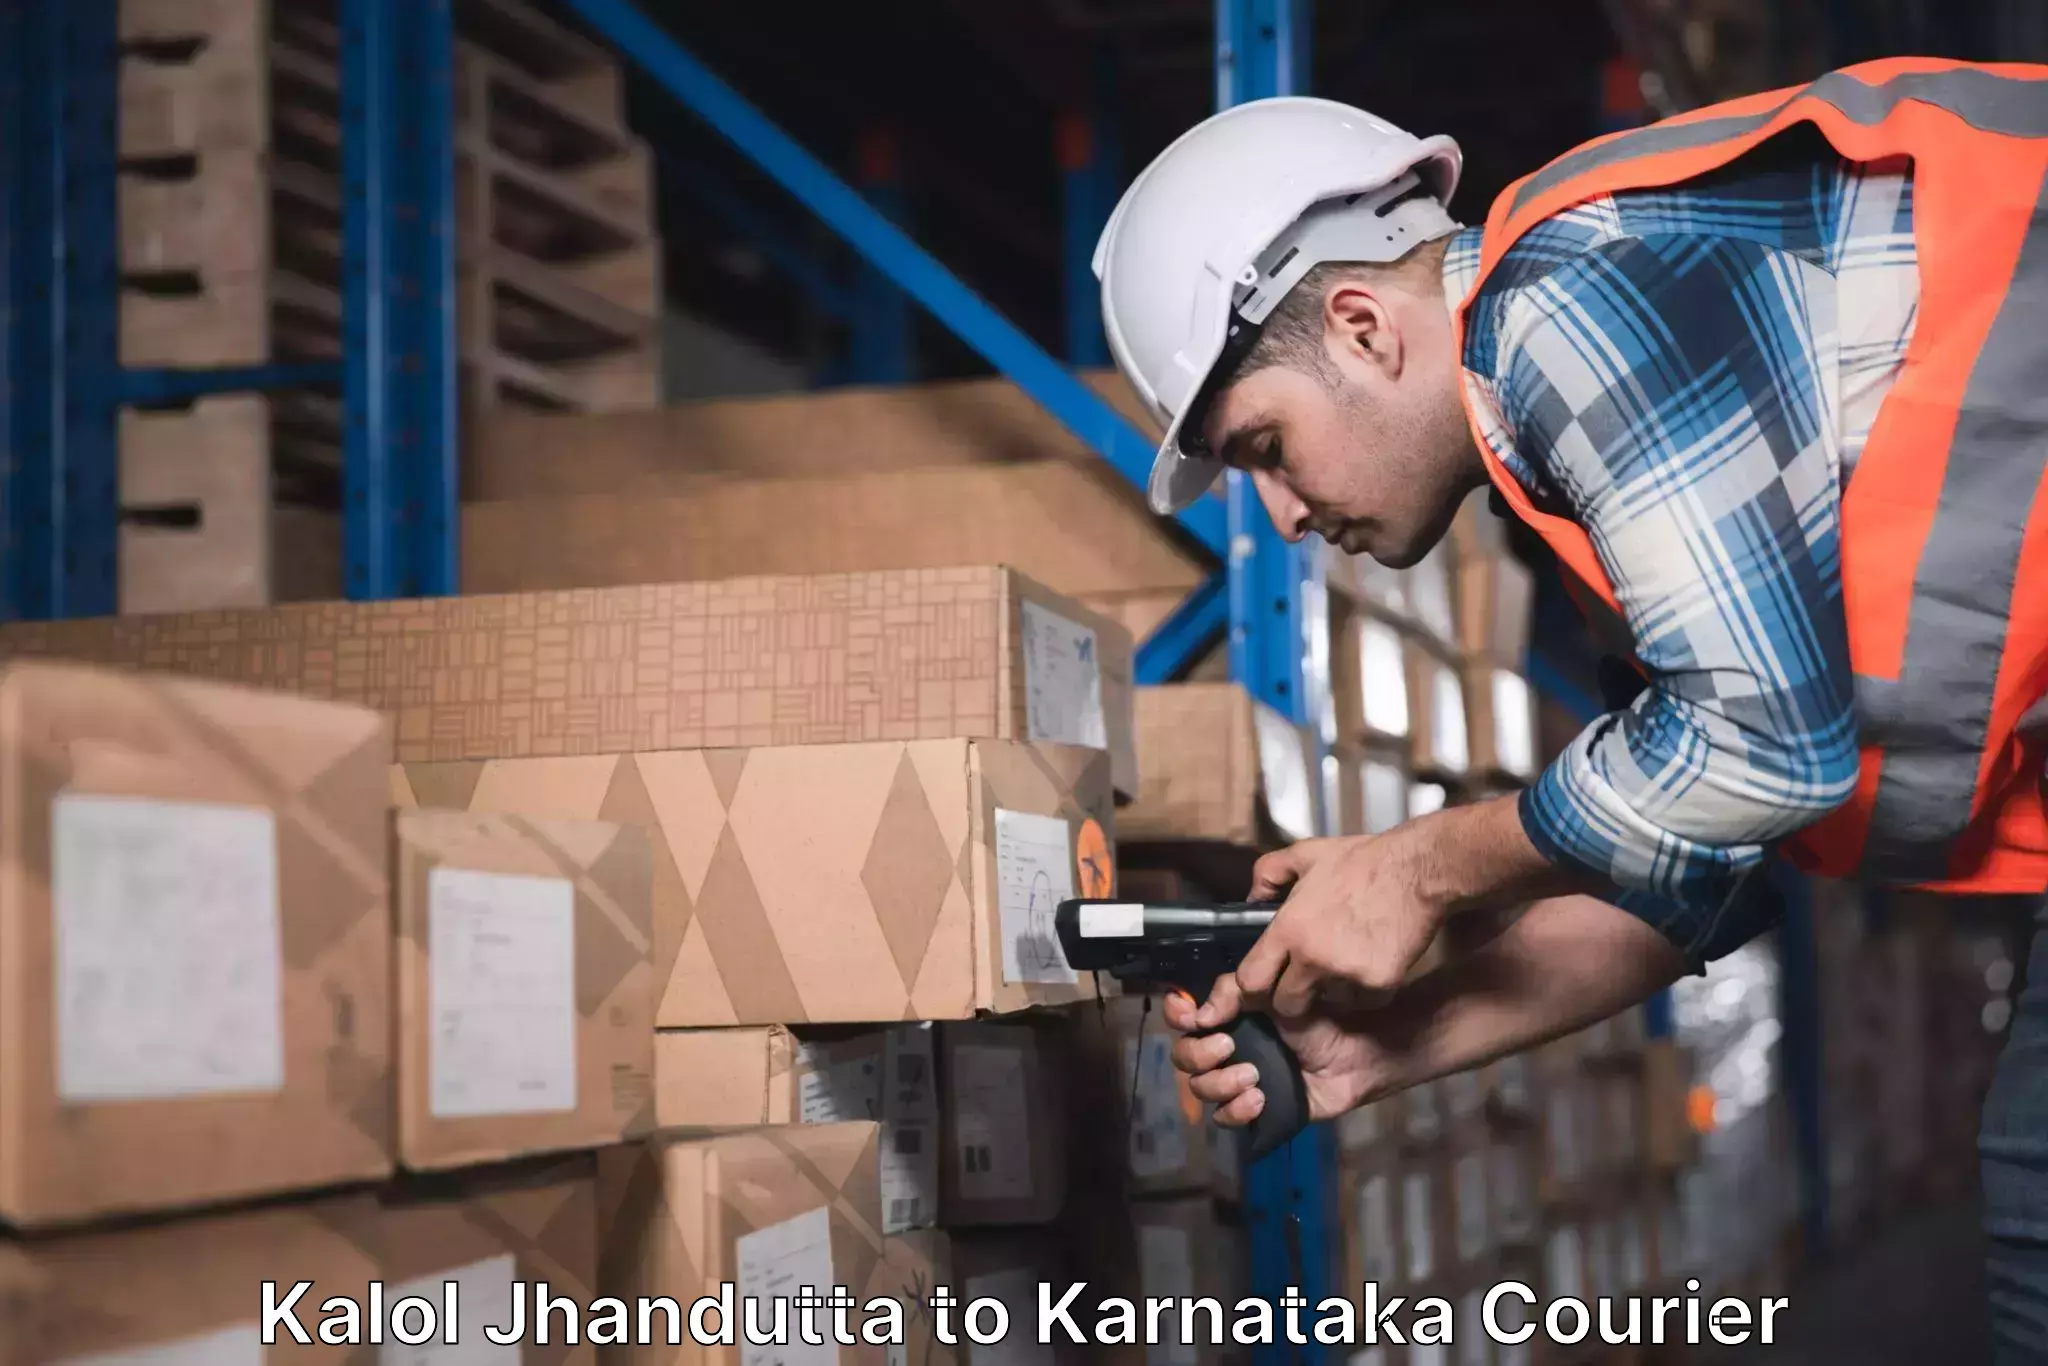 Seamless shipping experience Kalol Jhandutta to Nanjangud